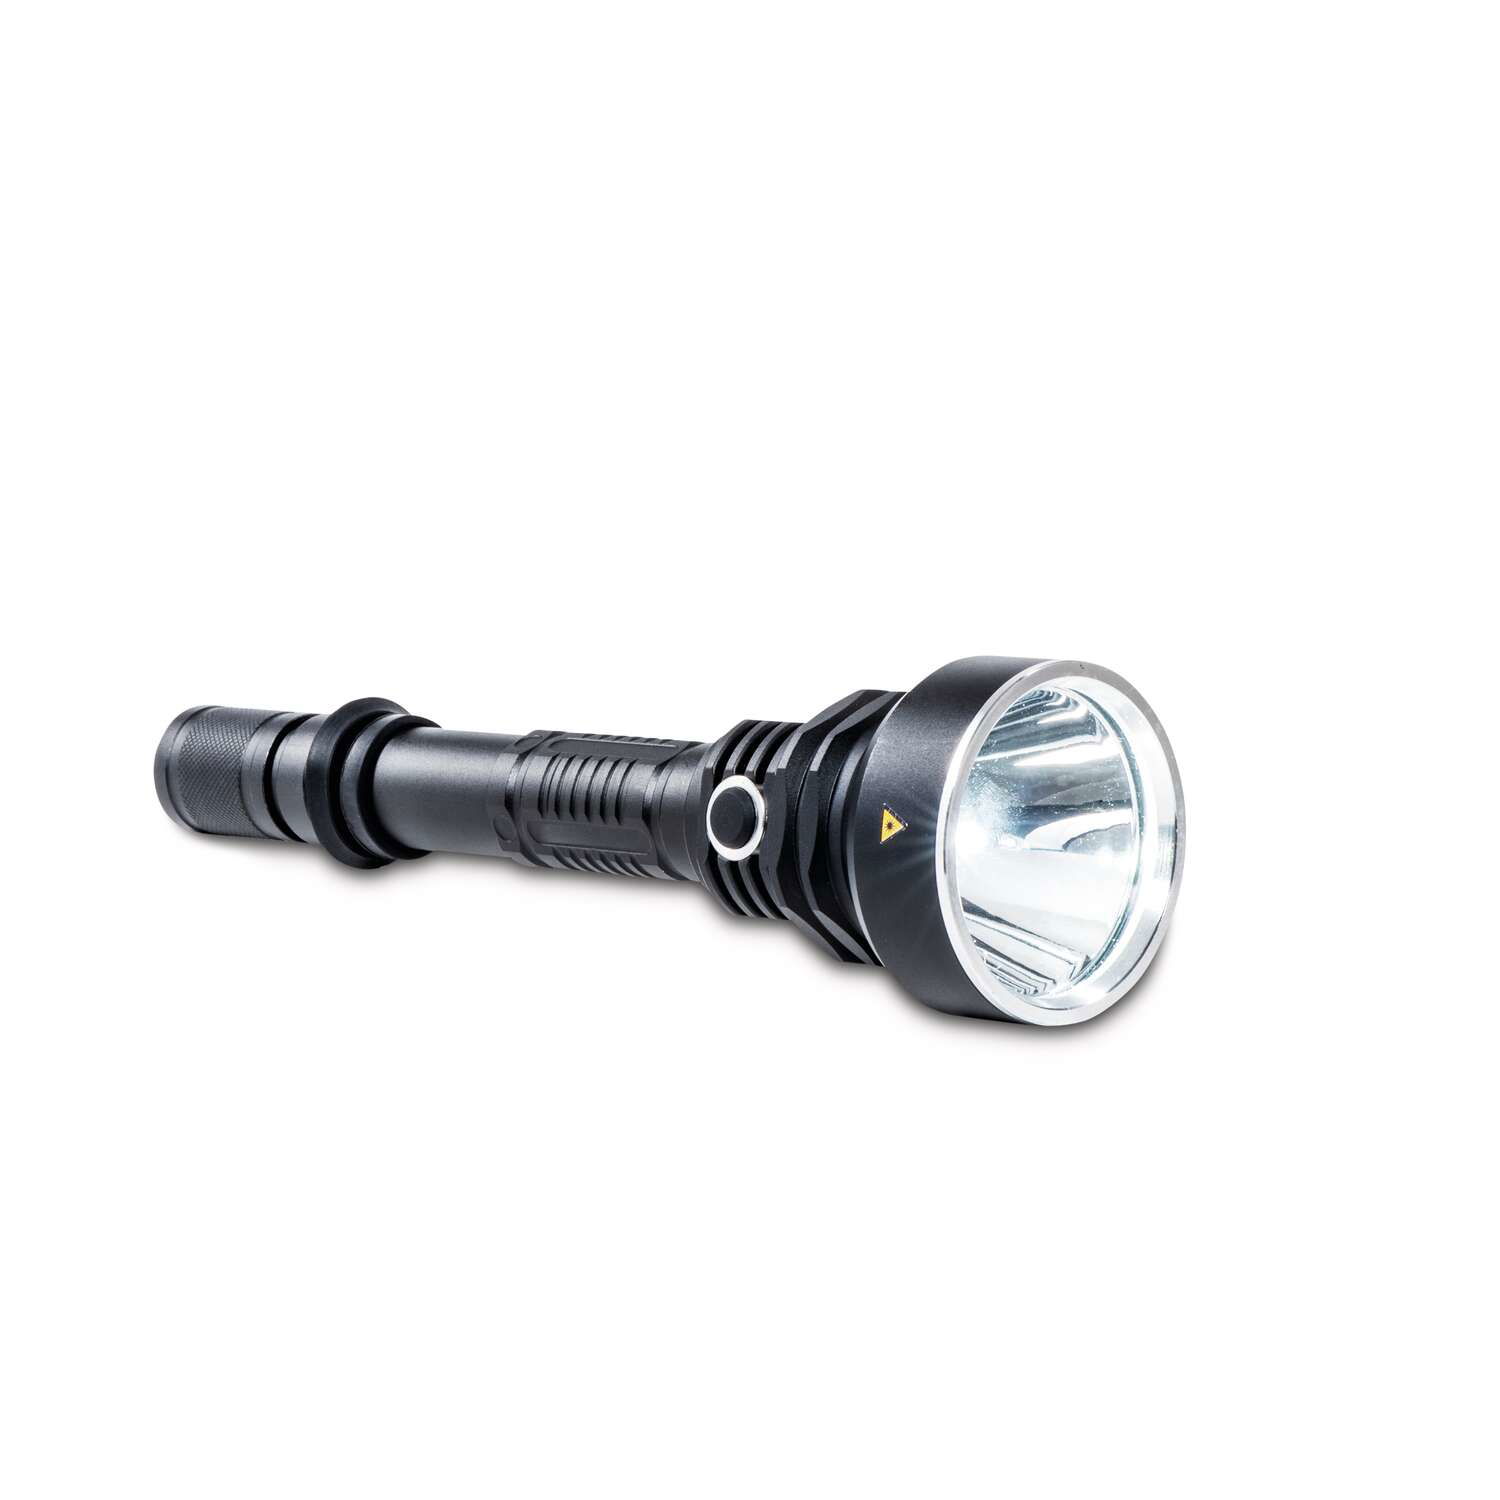 LED-Taschenlampe MAULhelios, Akku 23 cm, 10 W, bis zu 300 m